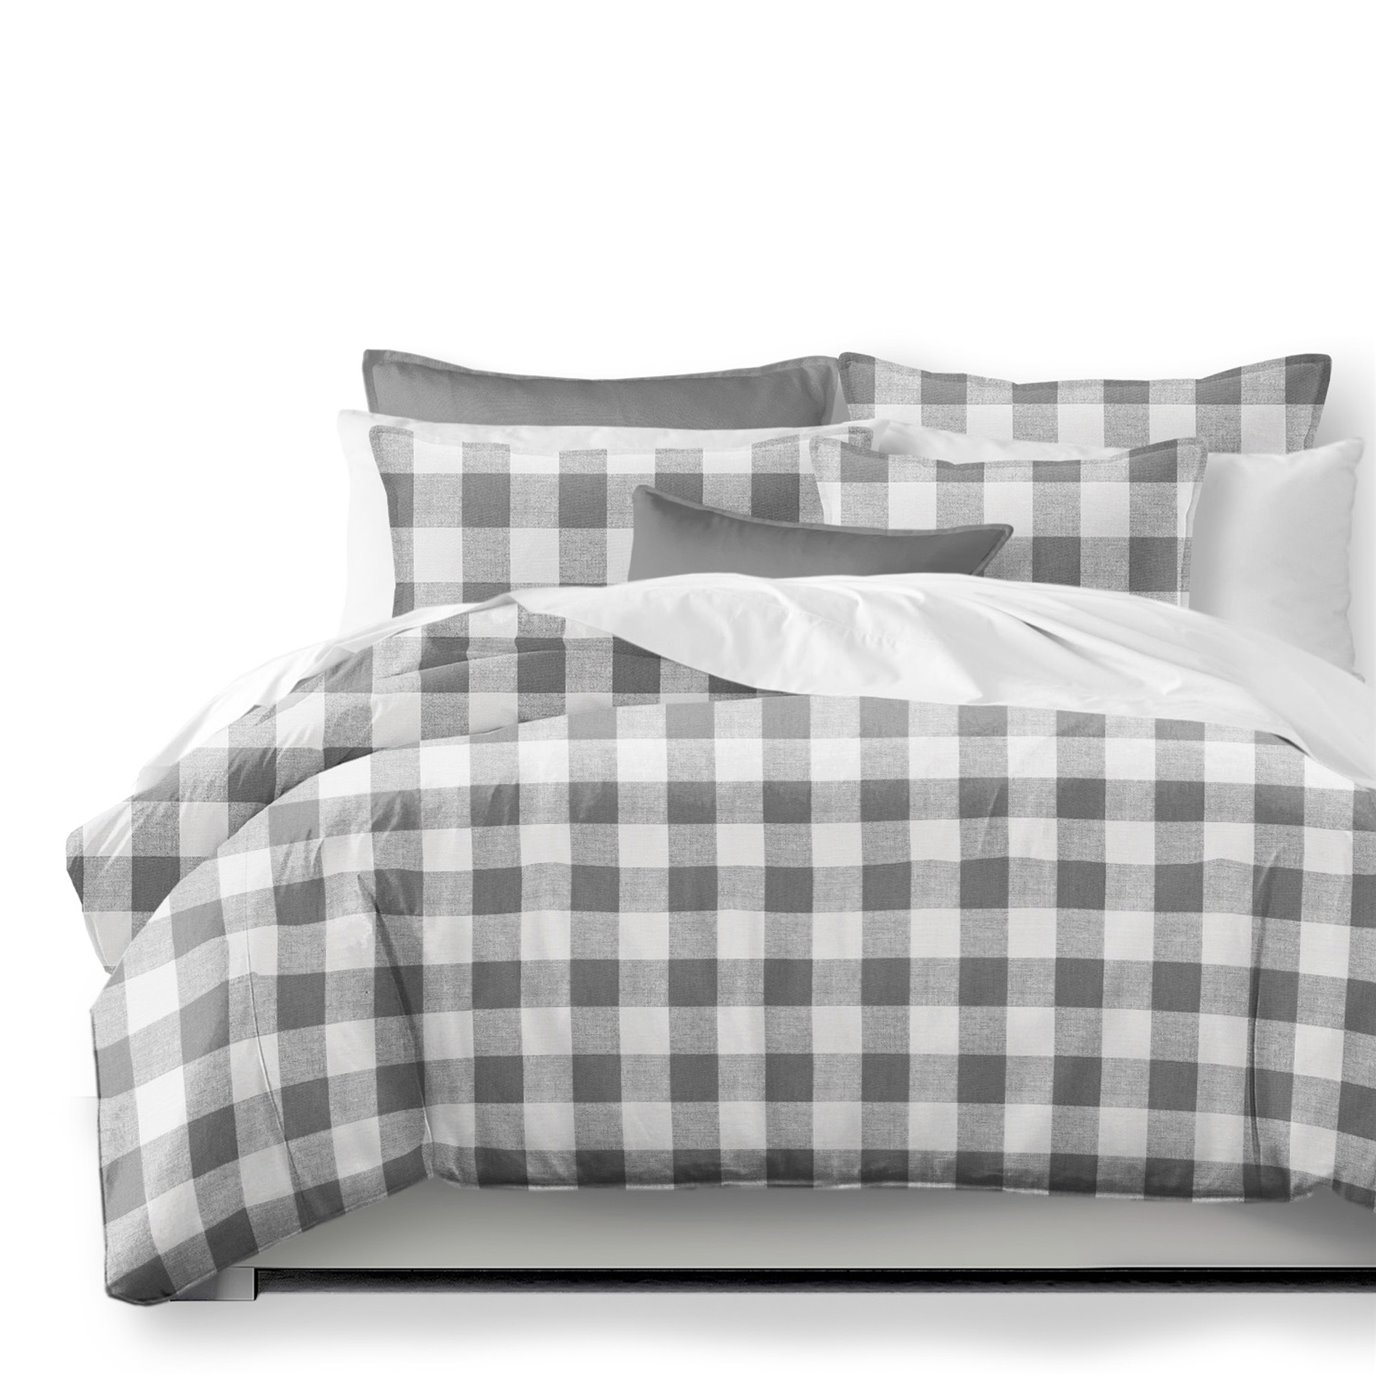 Lumberjack Check Gray/White Duvet Cover and Pillow Sham(s) Set - Size Twin